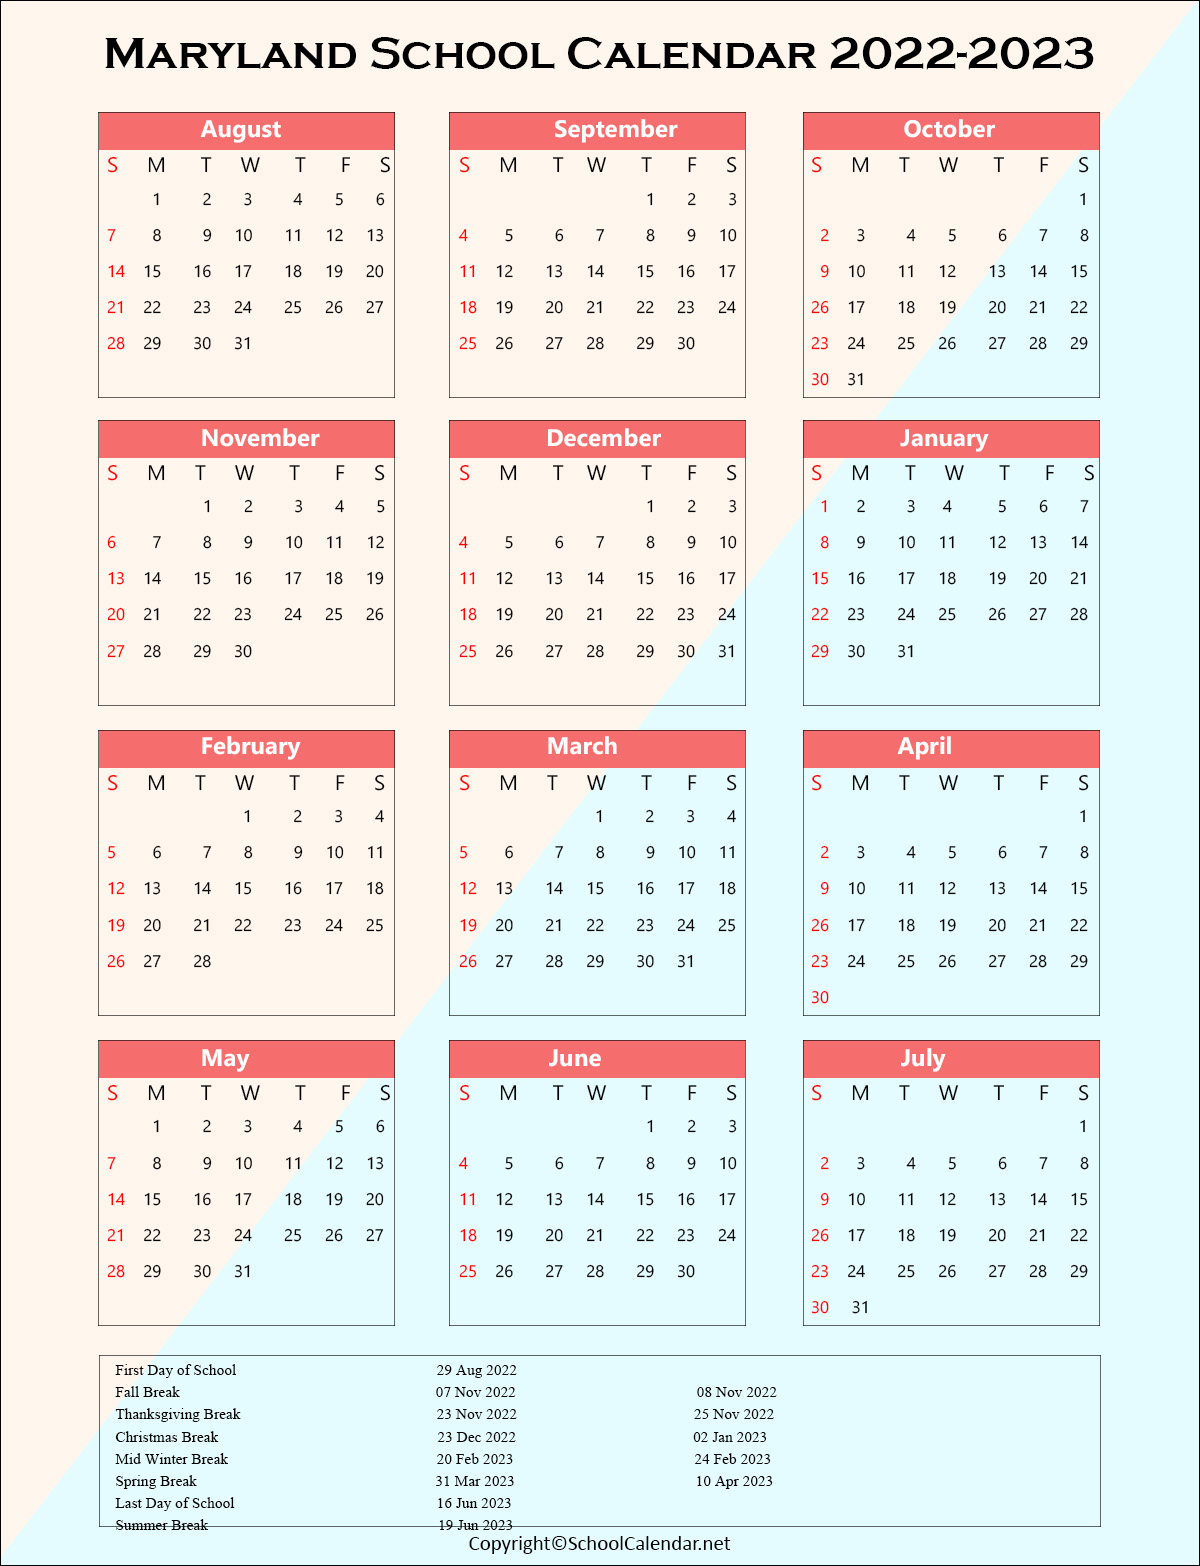 Maryland School Holiday Calendar 2022